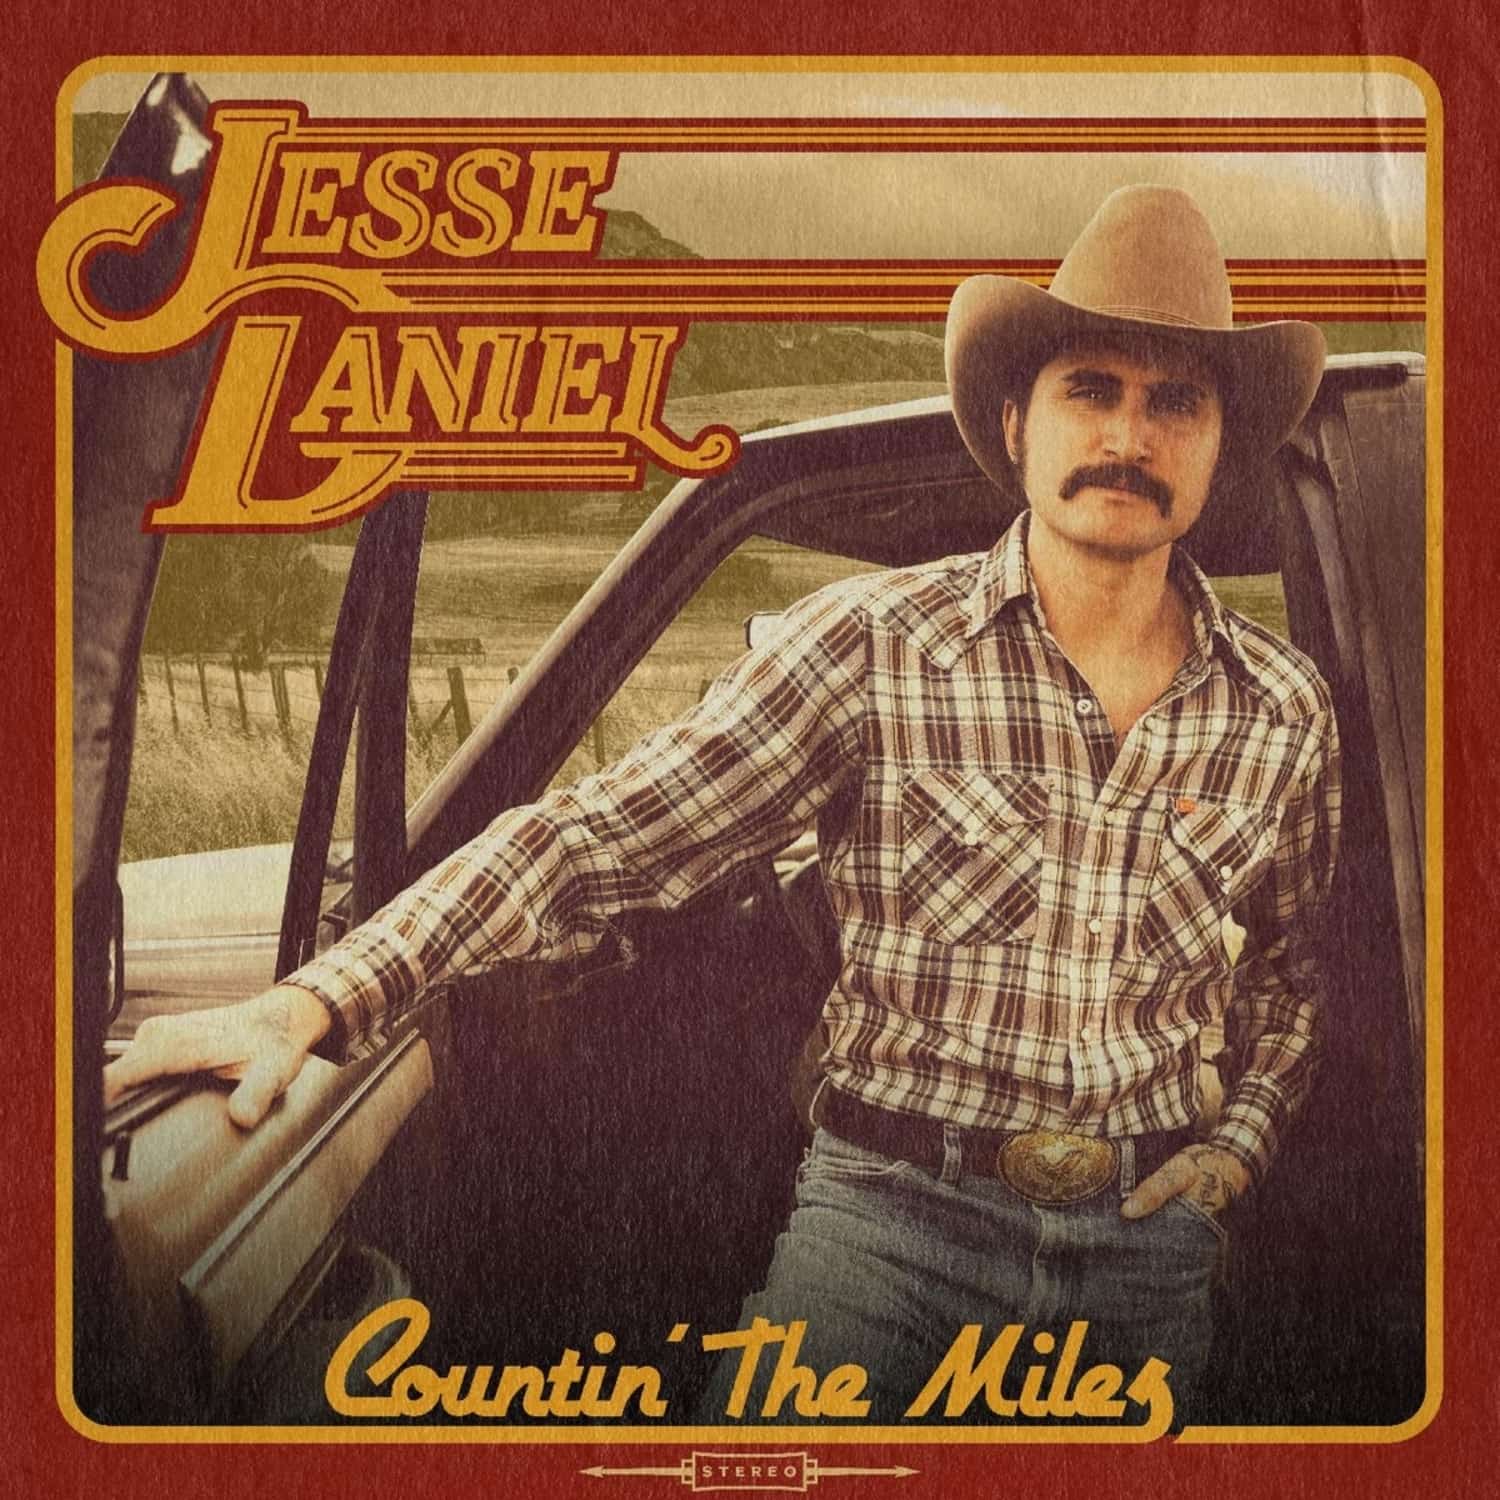 Jesse Daniel - COUNTIN THE MILES 